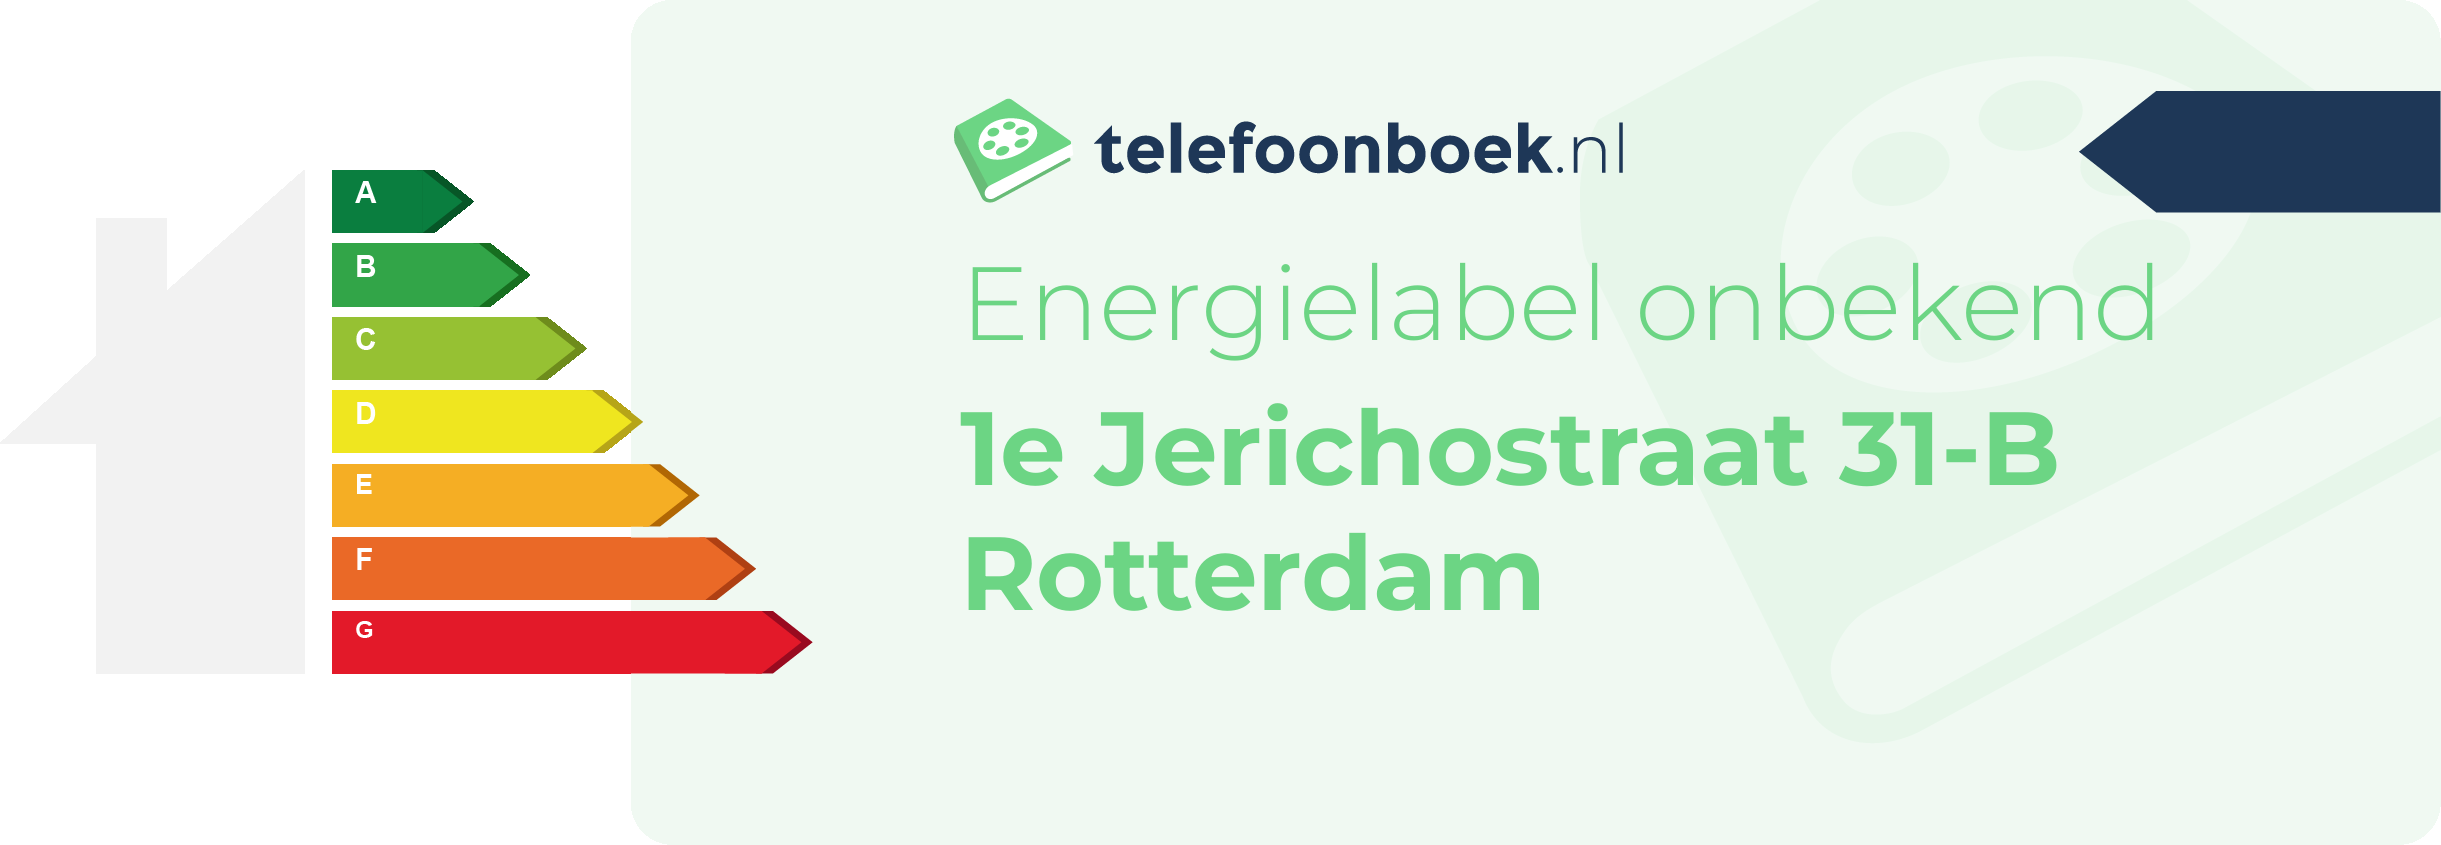 Energielabel 1e Jerichostraat 31-B Rotterdam